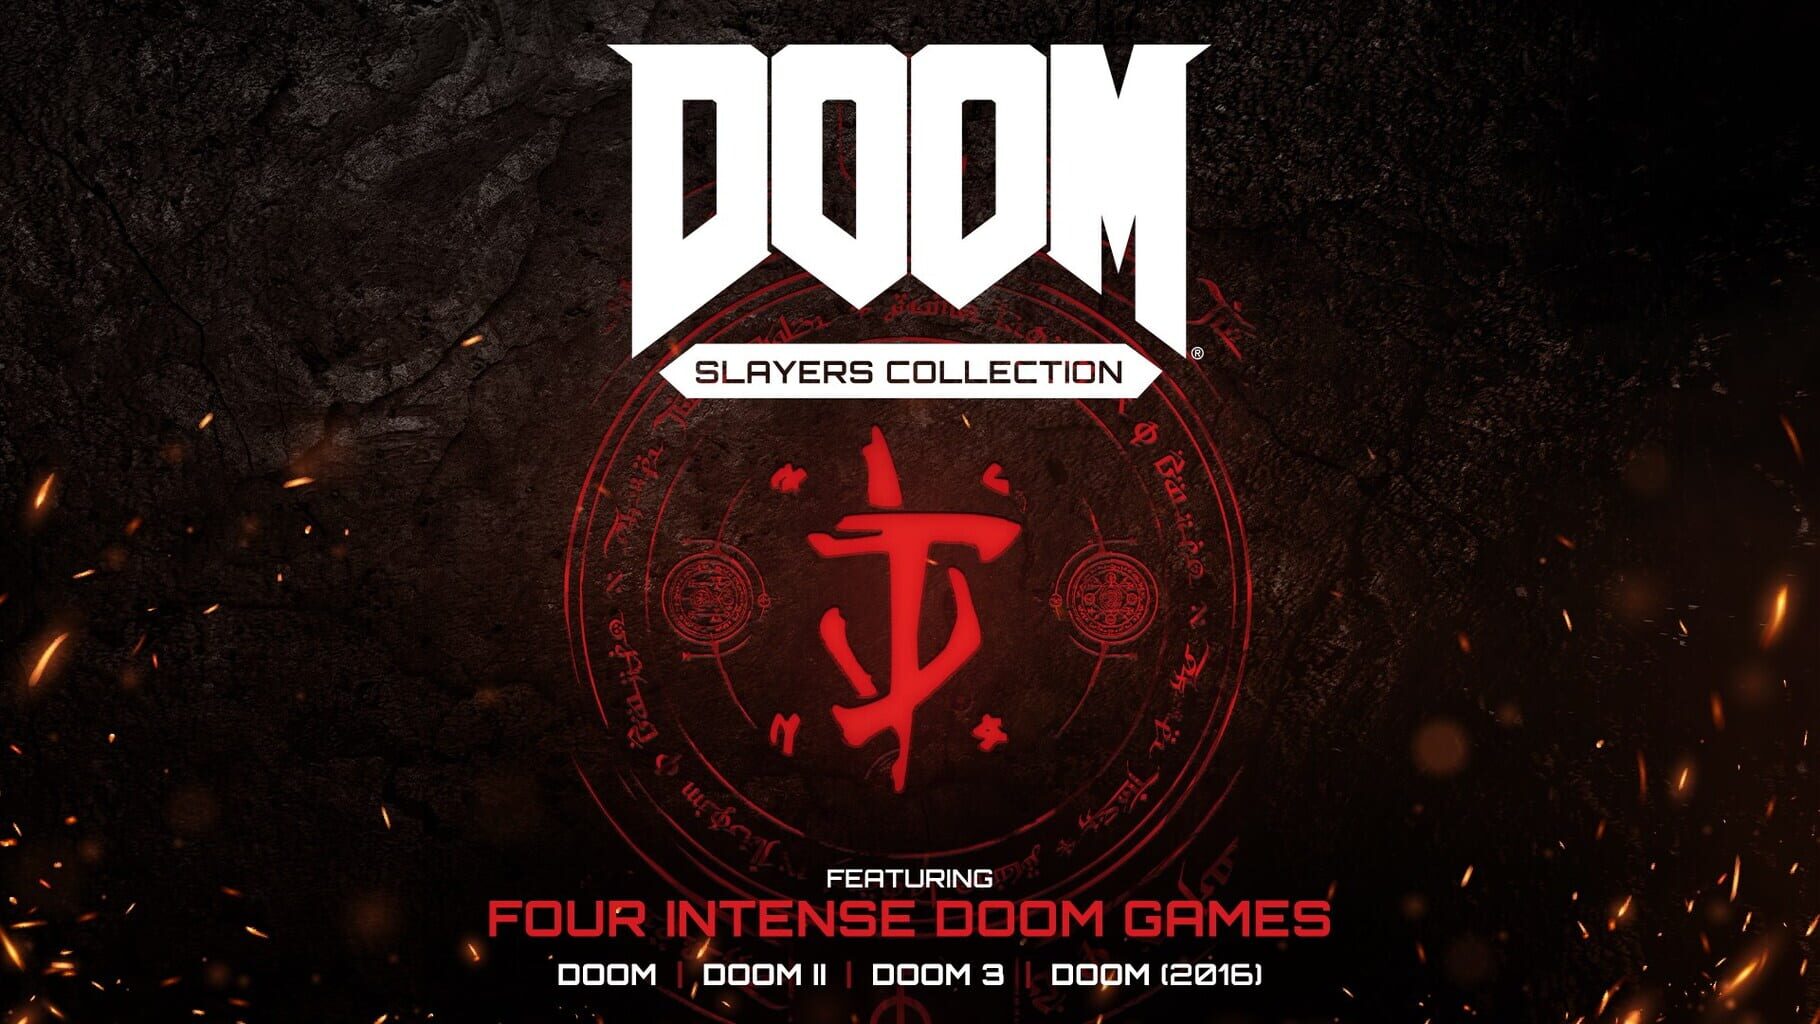 Doom Slayers Collection artwork